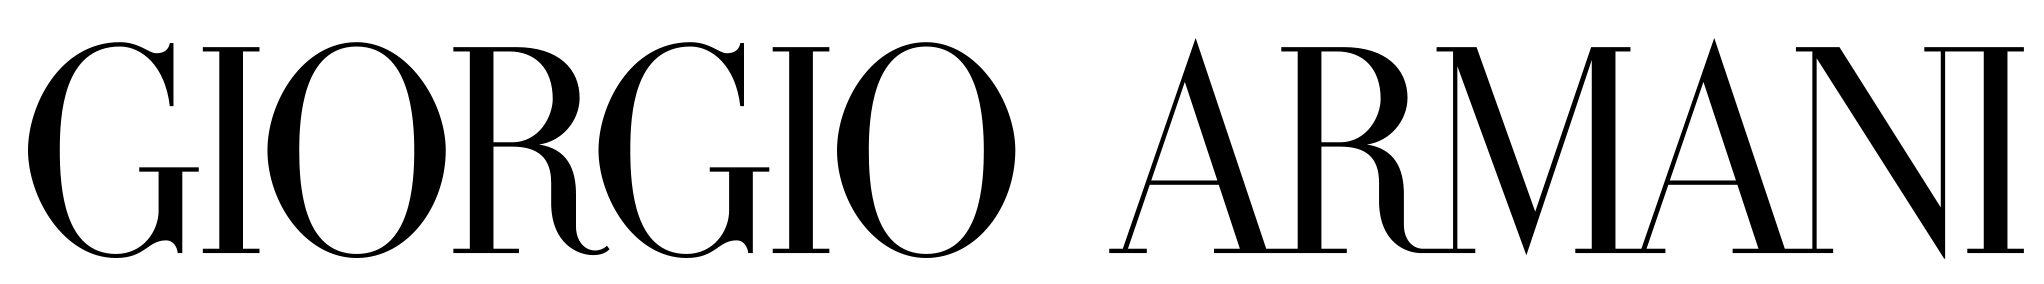 Giorgio Armani Logo Transparent Image